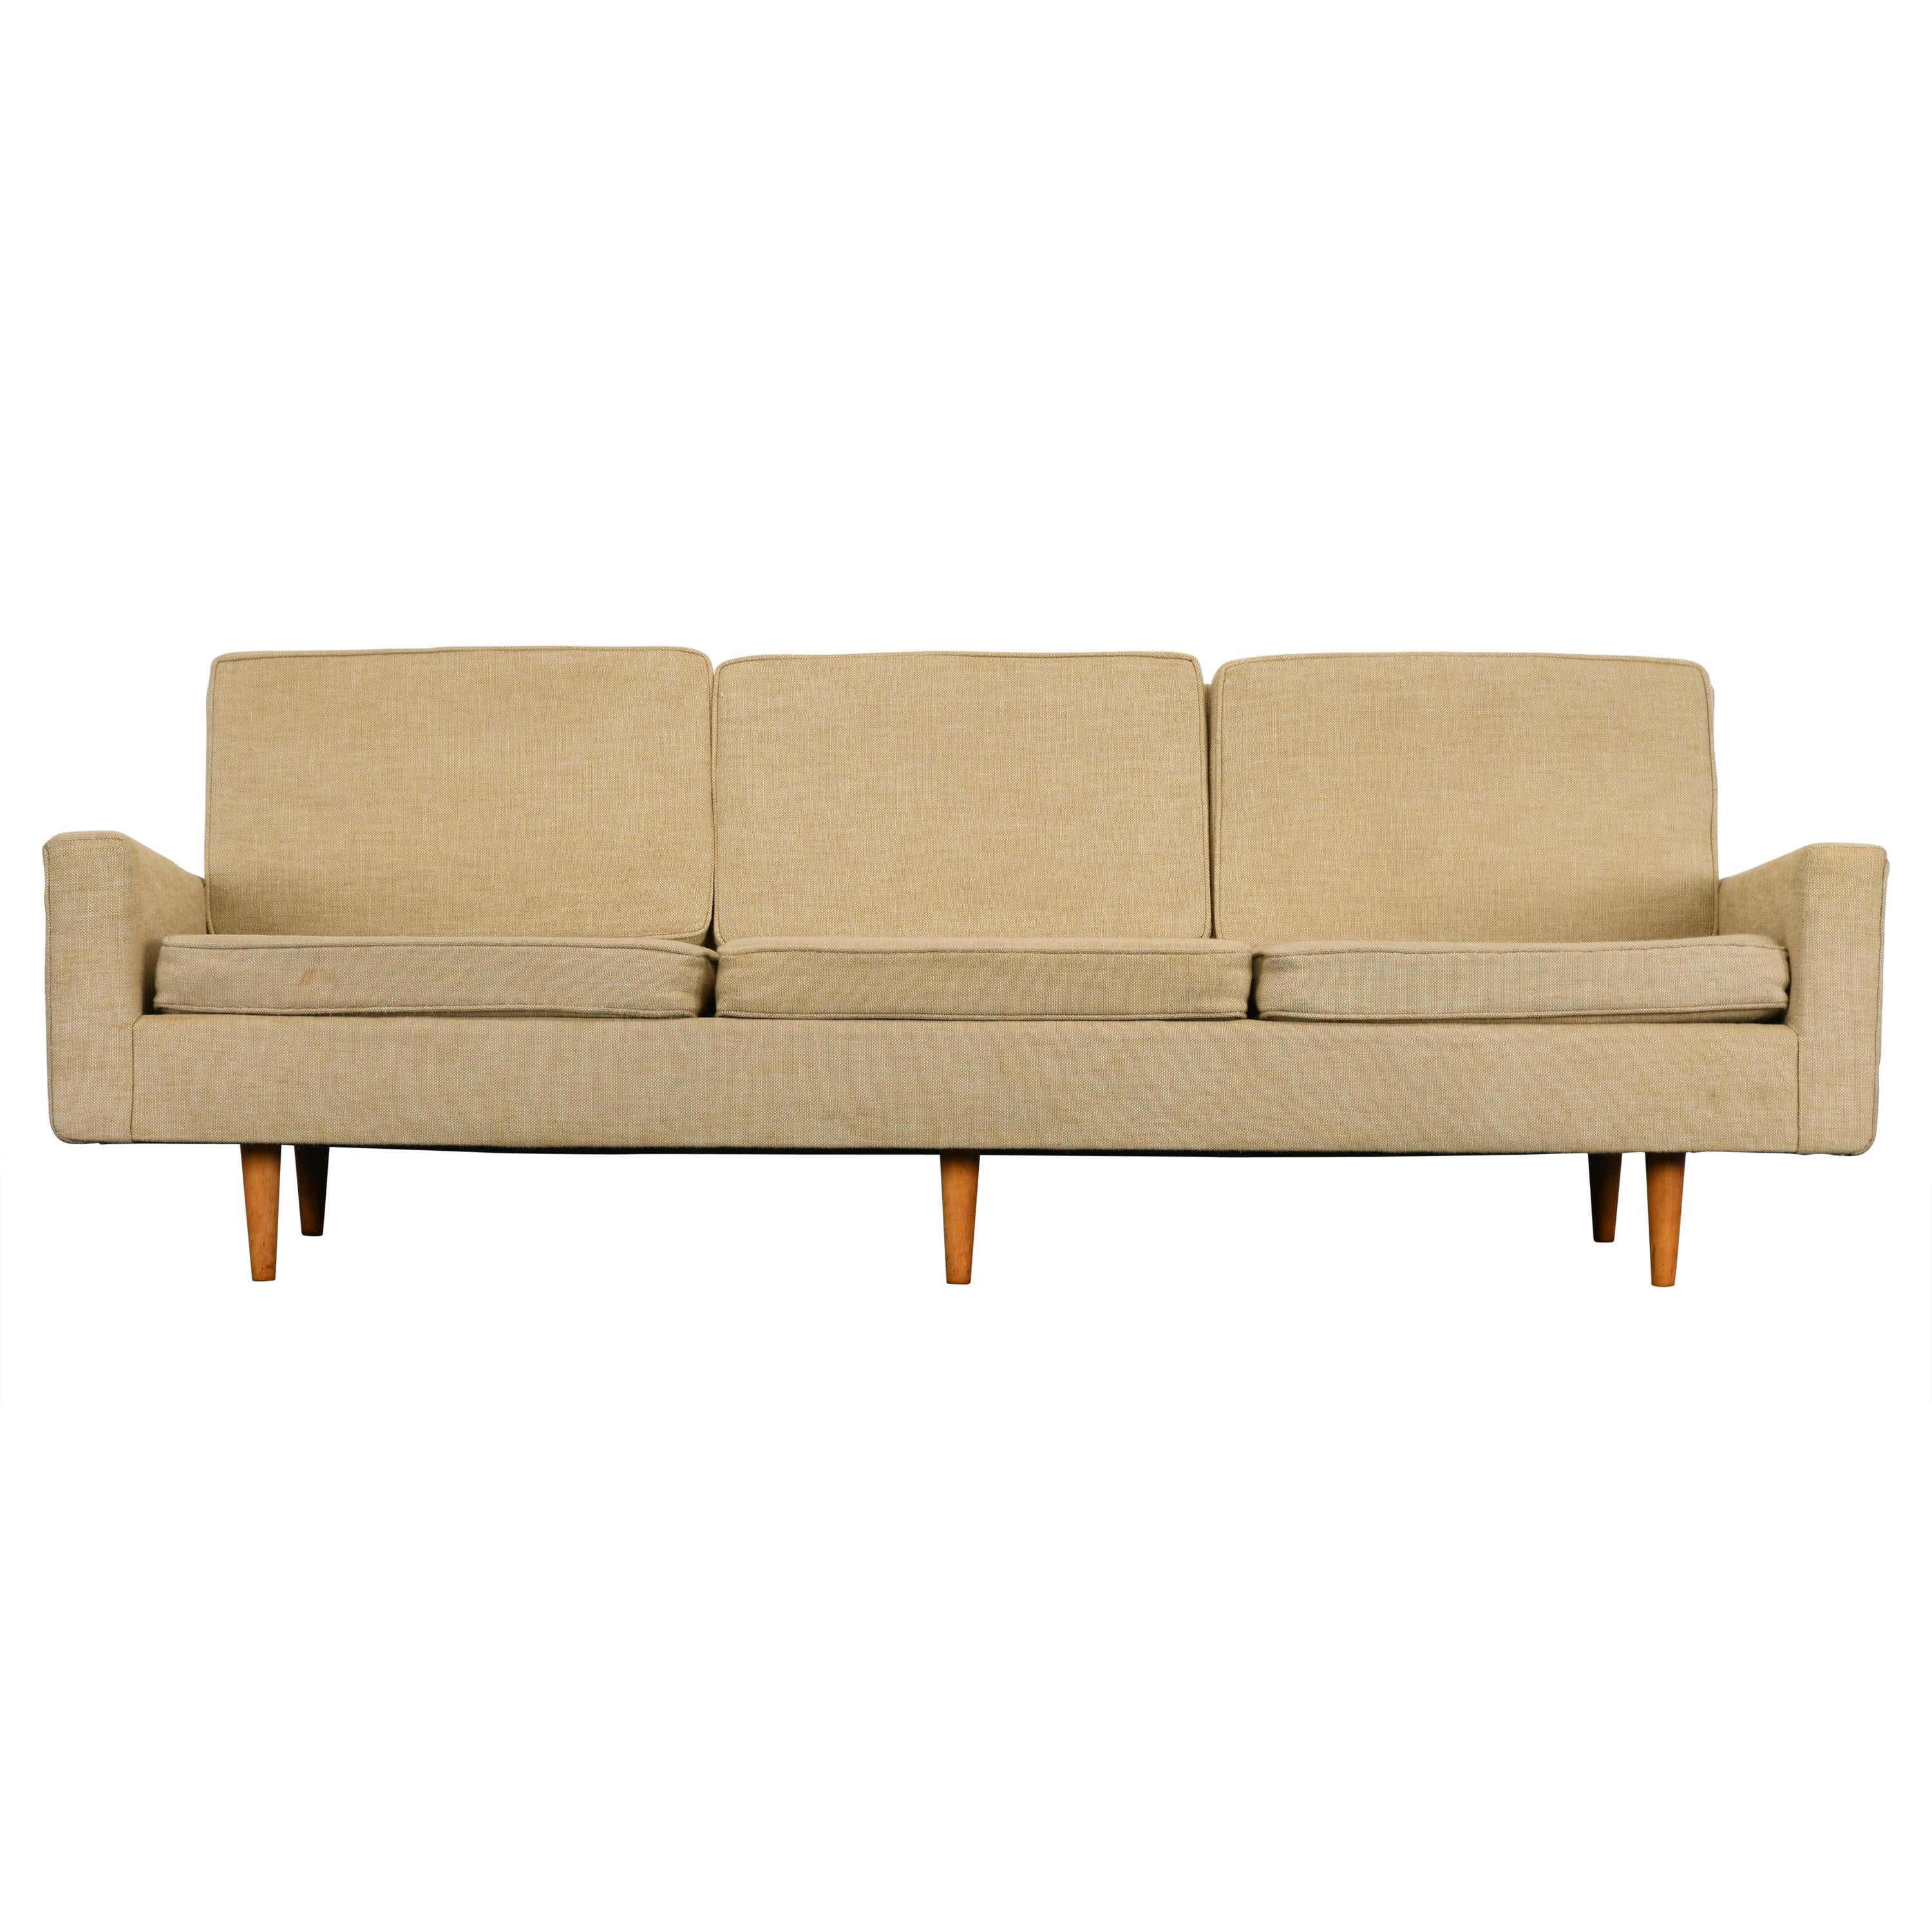 Florence Knoll Sofa Model #26, 1947-1970